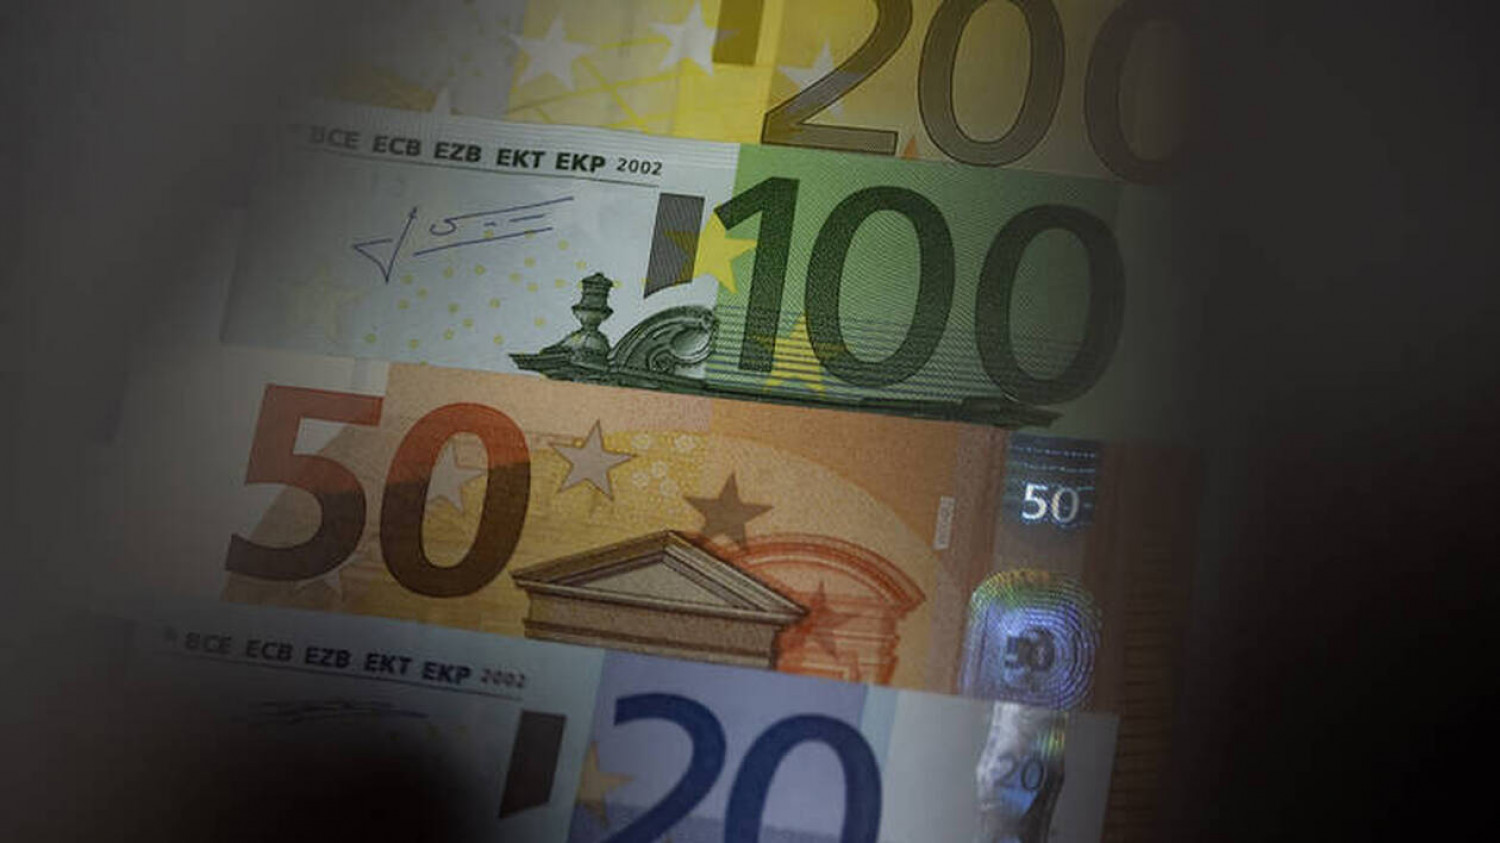 Eιδικές κατηγορίες για τα 800 ευρώ: Πότε ξεκινούν οι υπεύθυνες δηλώσεις